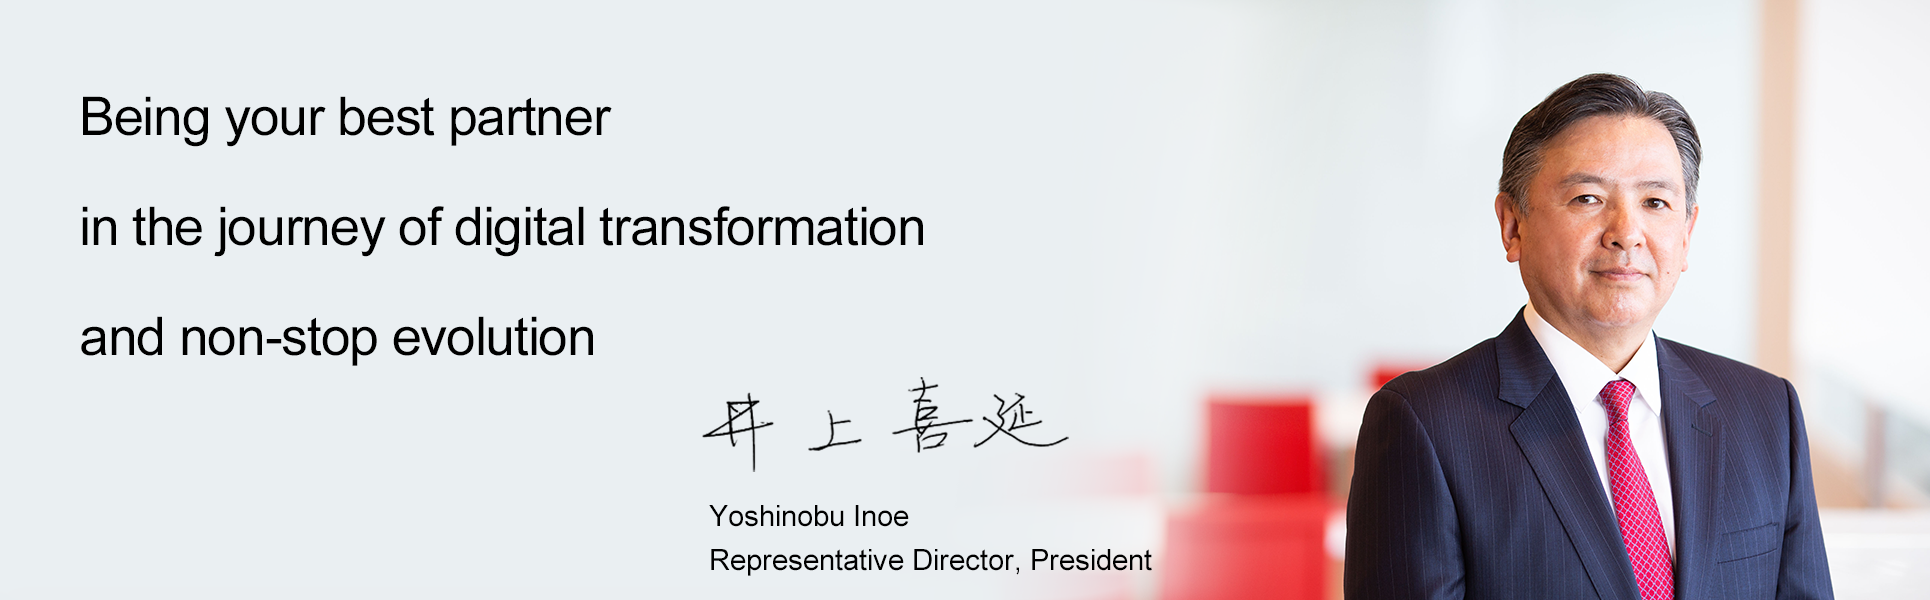 Yoshinobu Inoue Representative Director, President